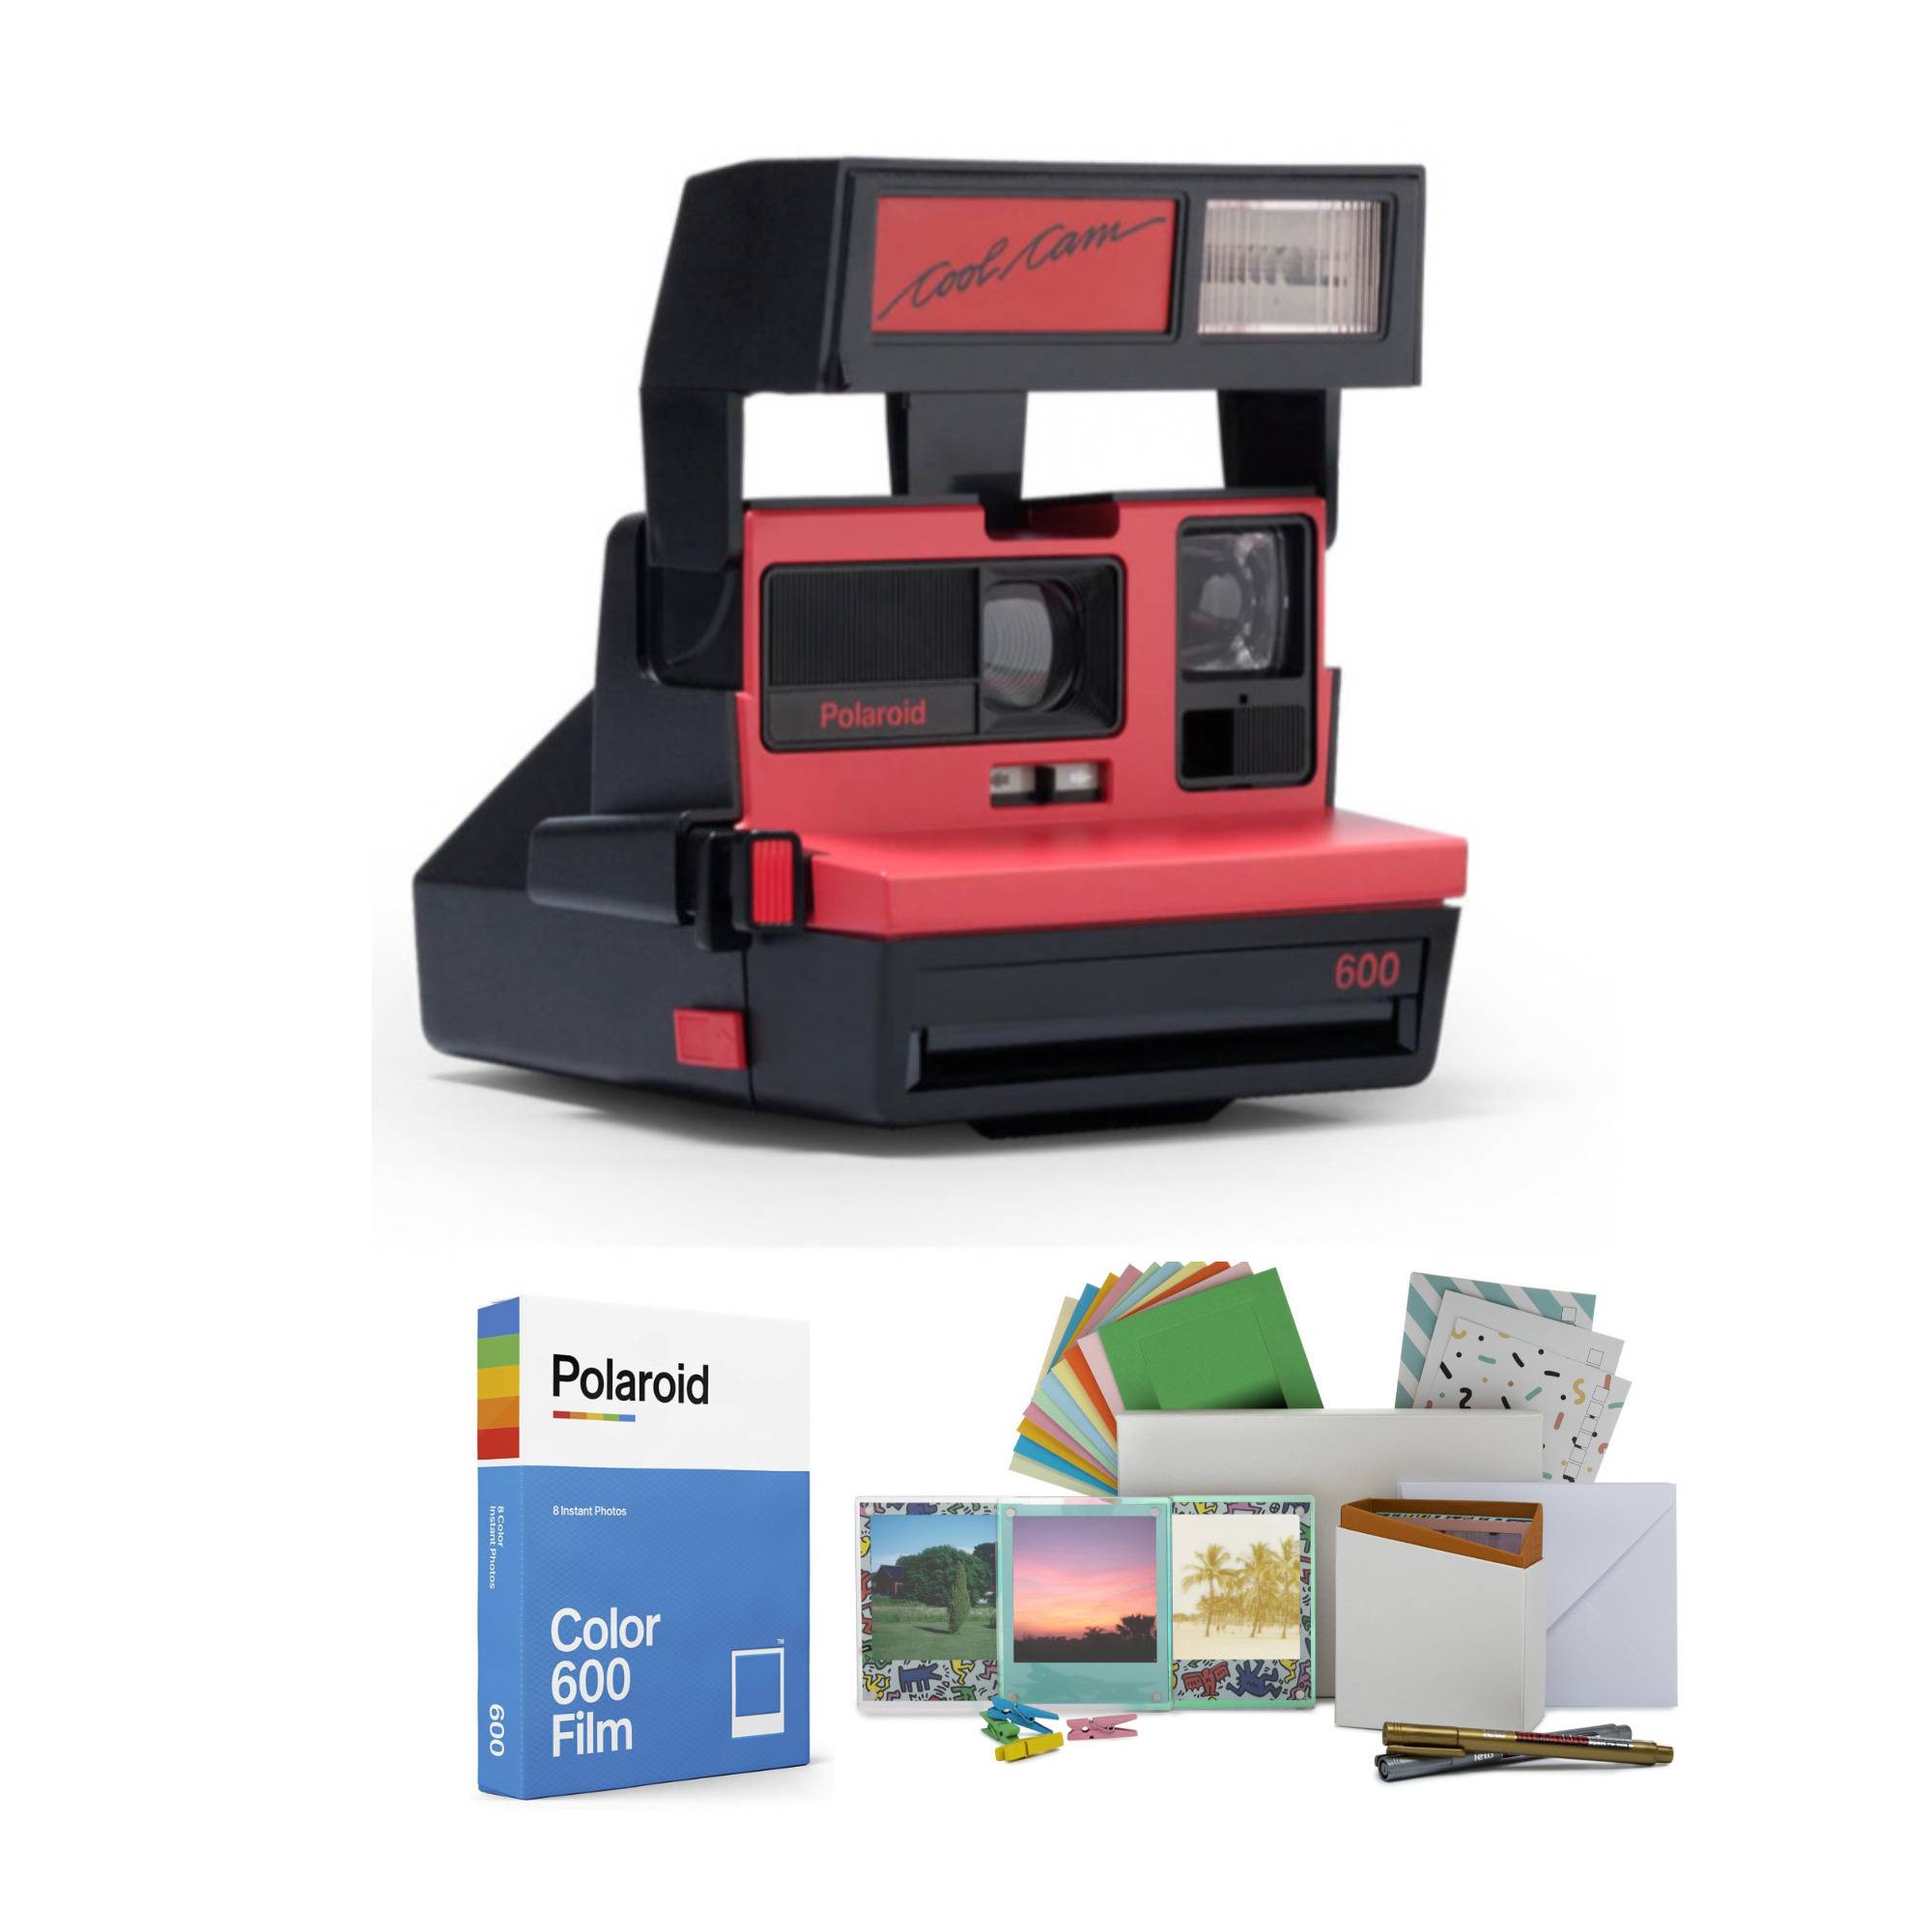 Polaroid Originals 600 Cool Cam Instant Film Camera (Red) with Color Instant Film and Film Kit